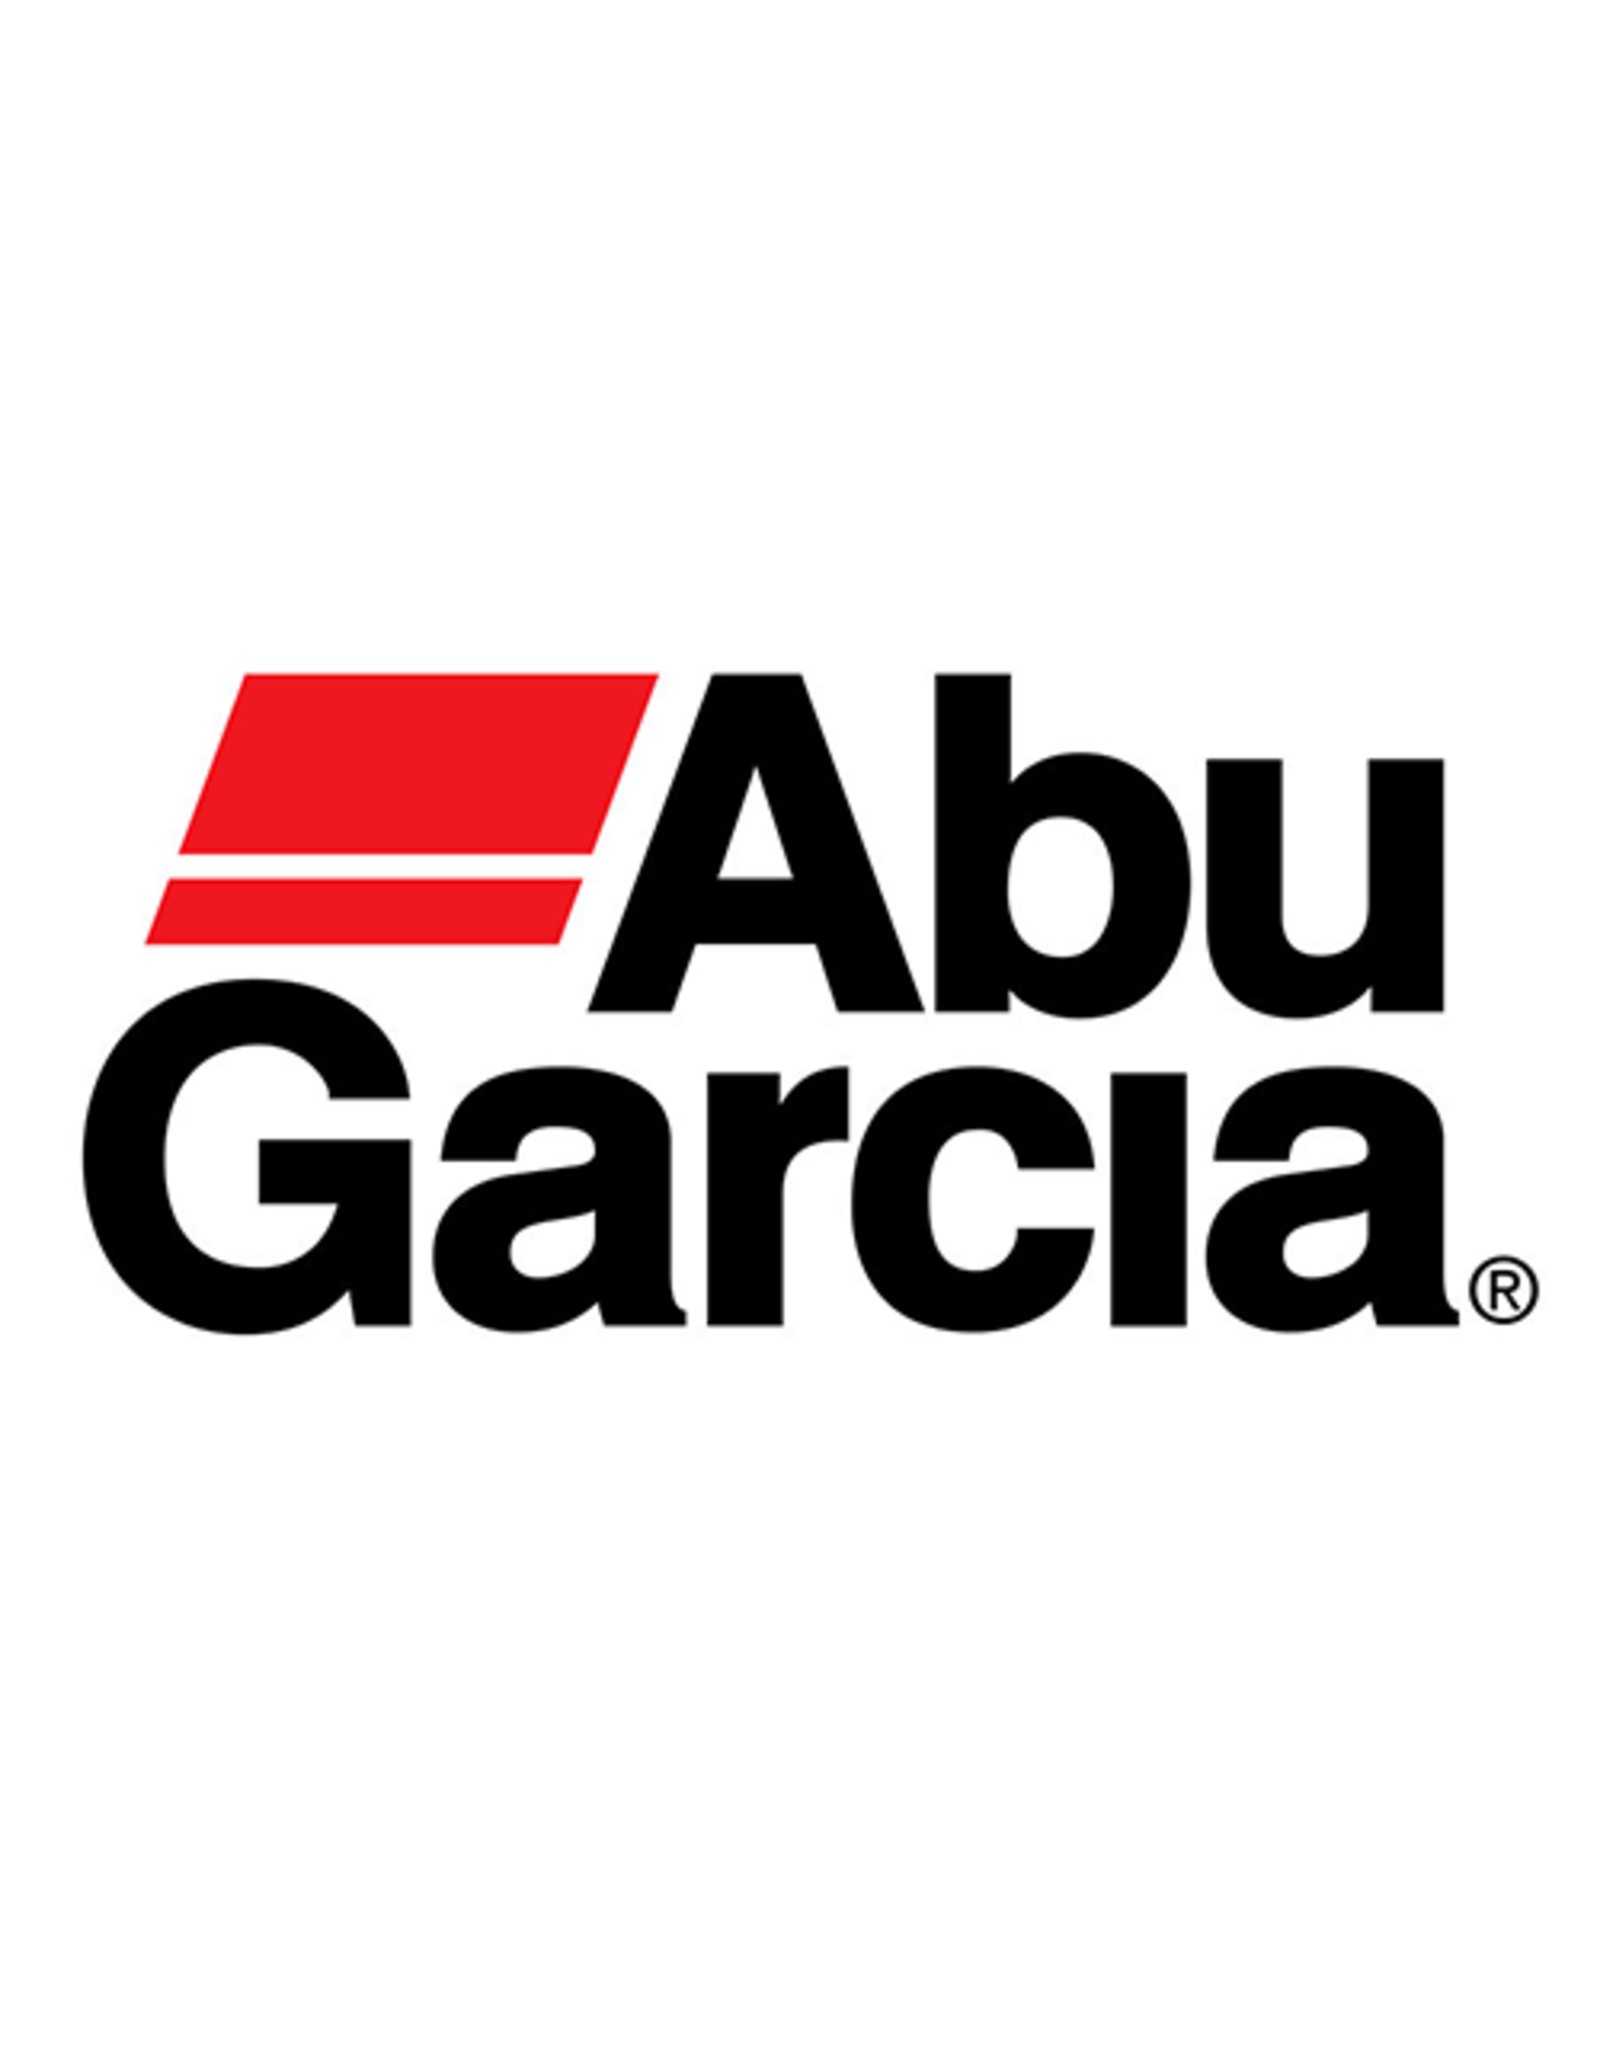 Abu Garcia 13108  SPOOL CAP